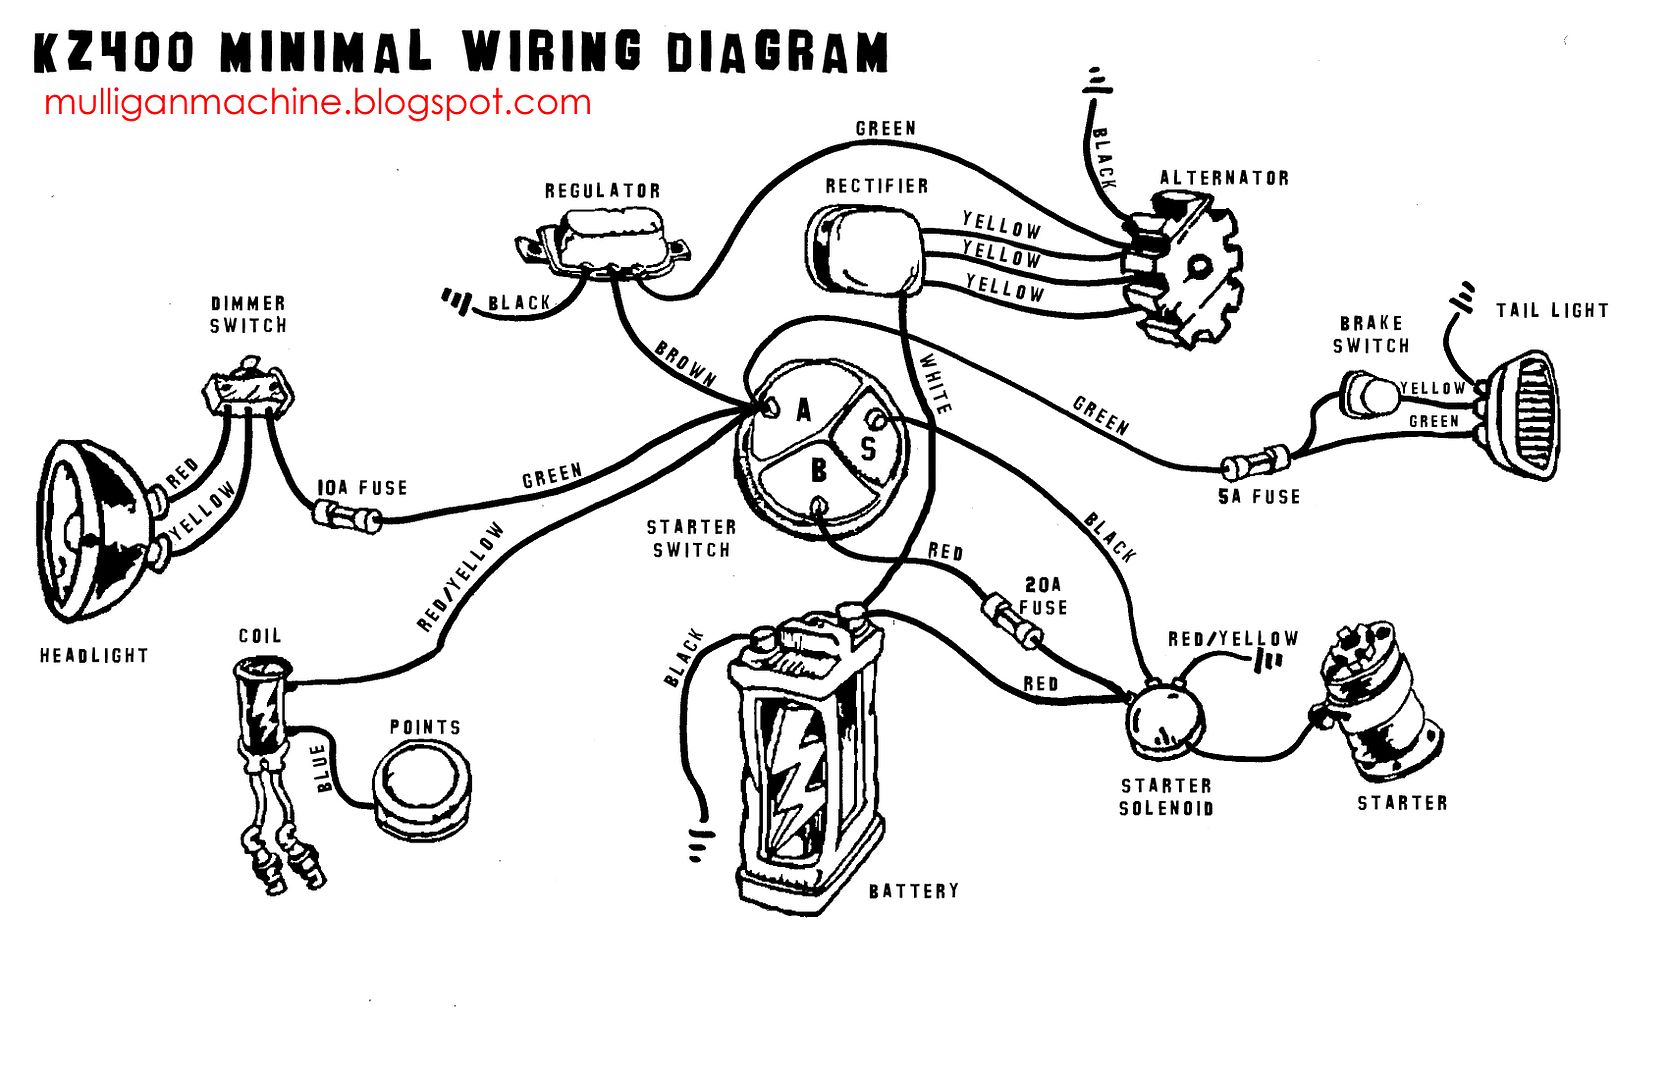 kz400 minimal wiring diagram